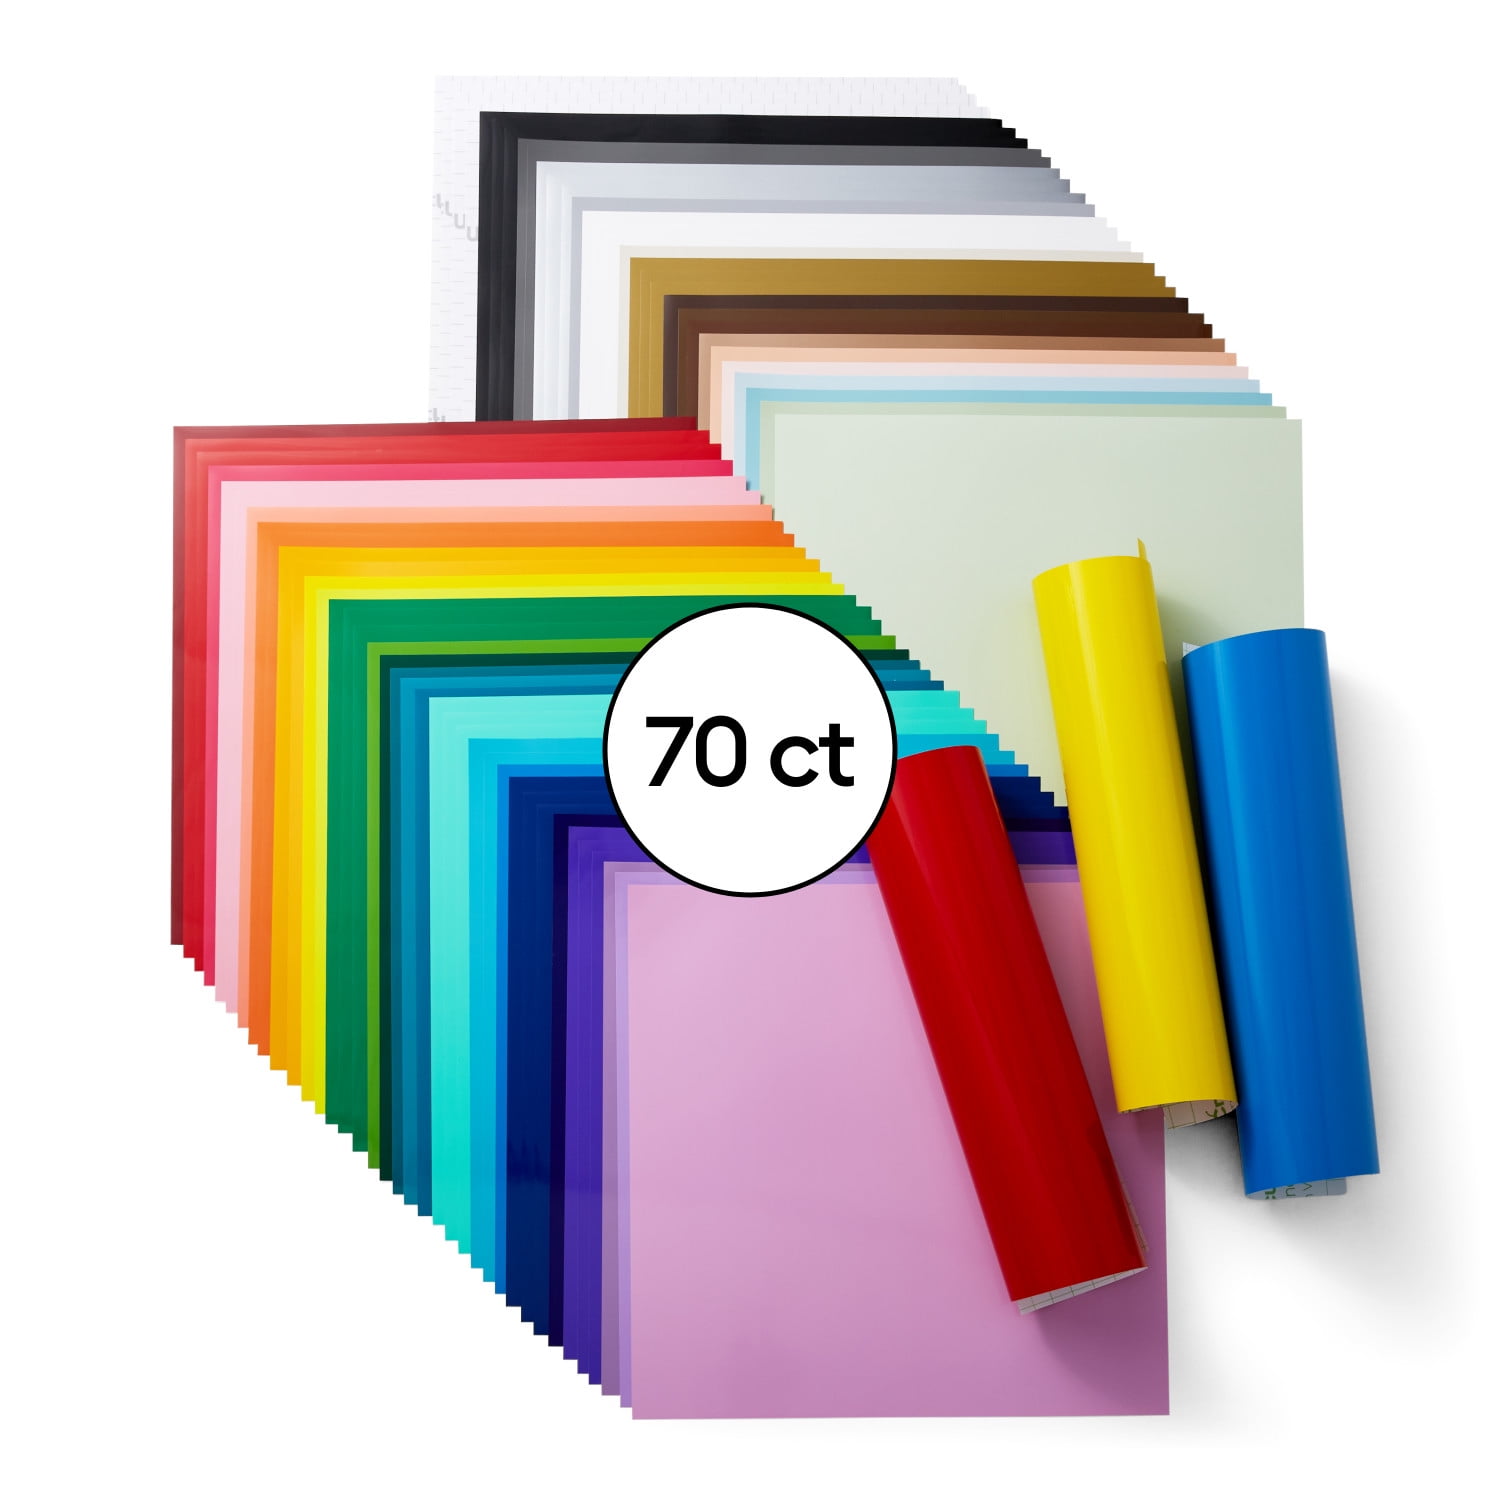 Cricut Joy Smart Permanent Adhesive Vinyl Rolls, Rainbow Color Bundle